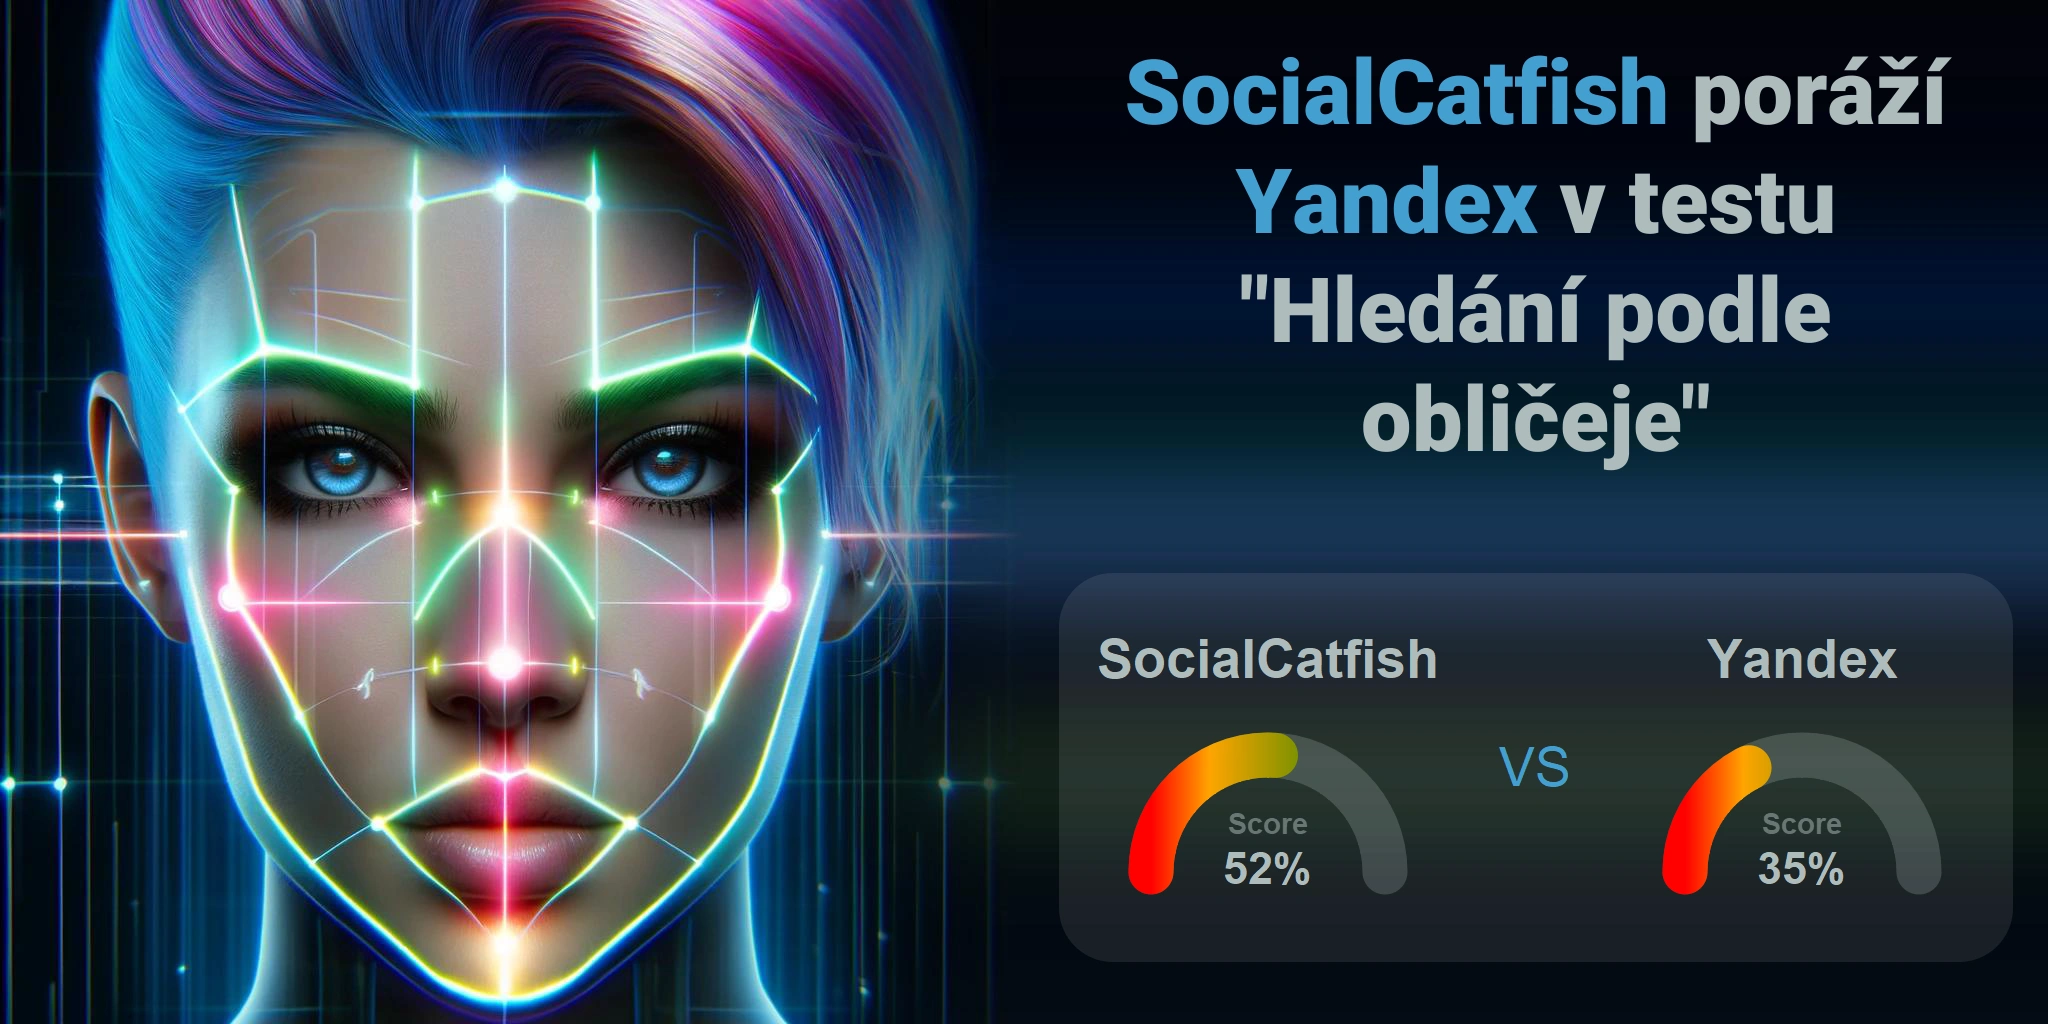 SocialCatfish.com vs Yandex.com